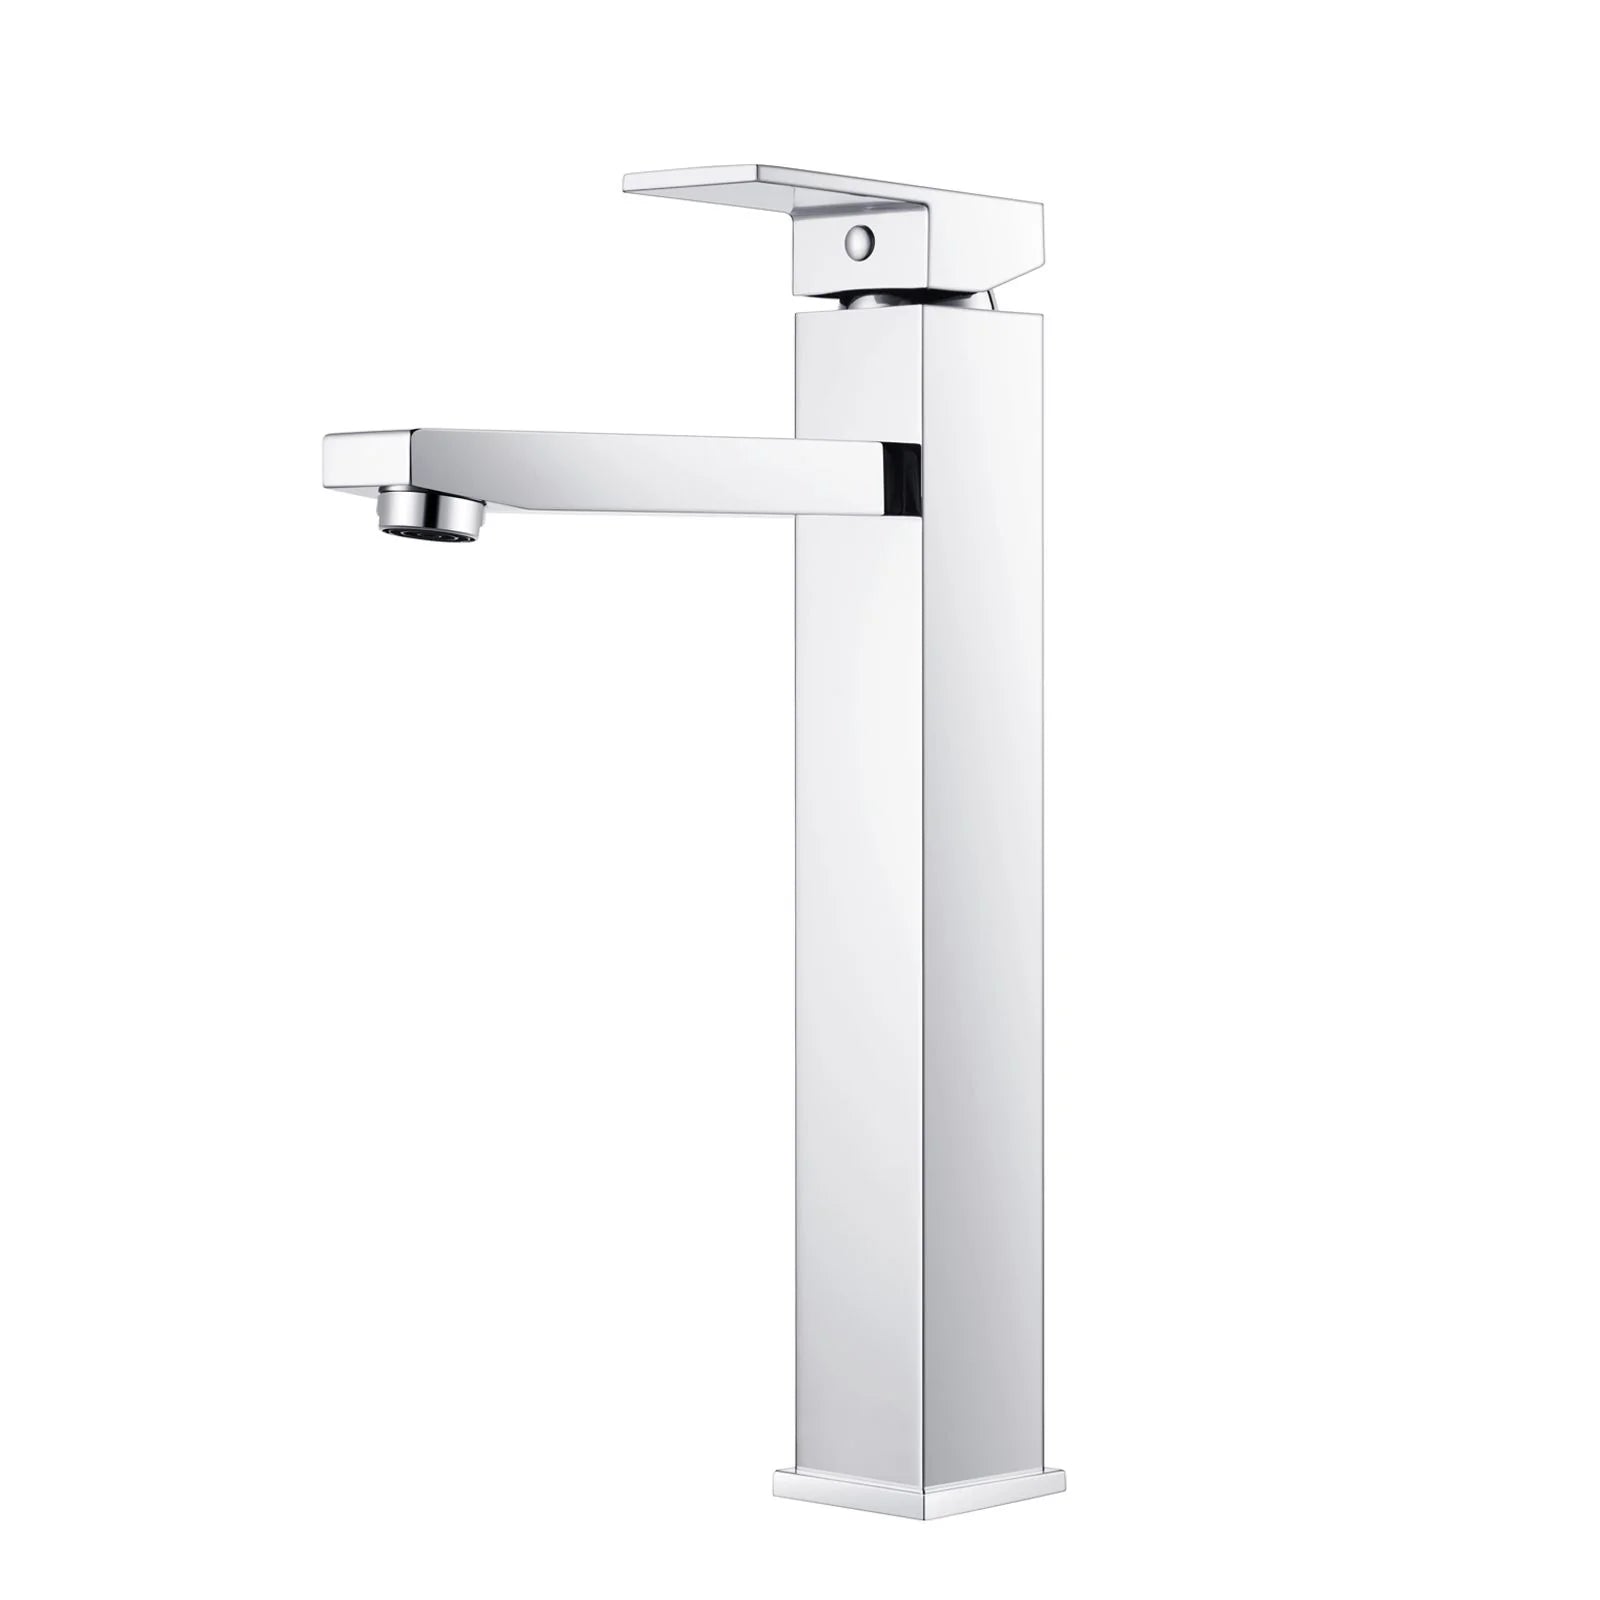 Blaze Tall Basin Mixer: Modern Faucet with Sleek Design and Functionality-Chrome-CH0119_BM